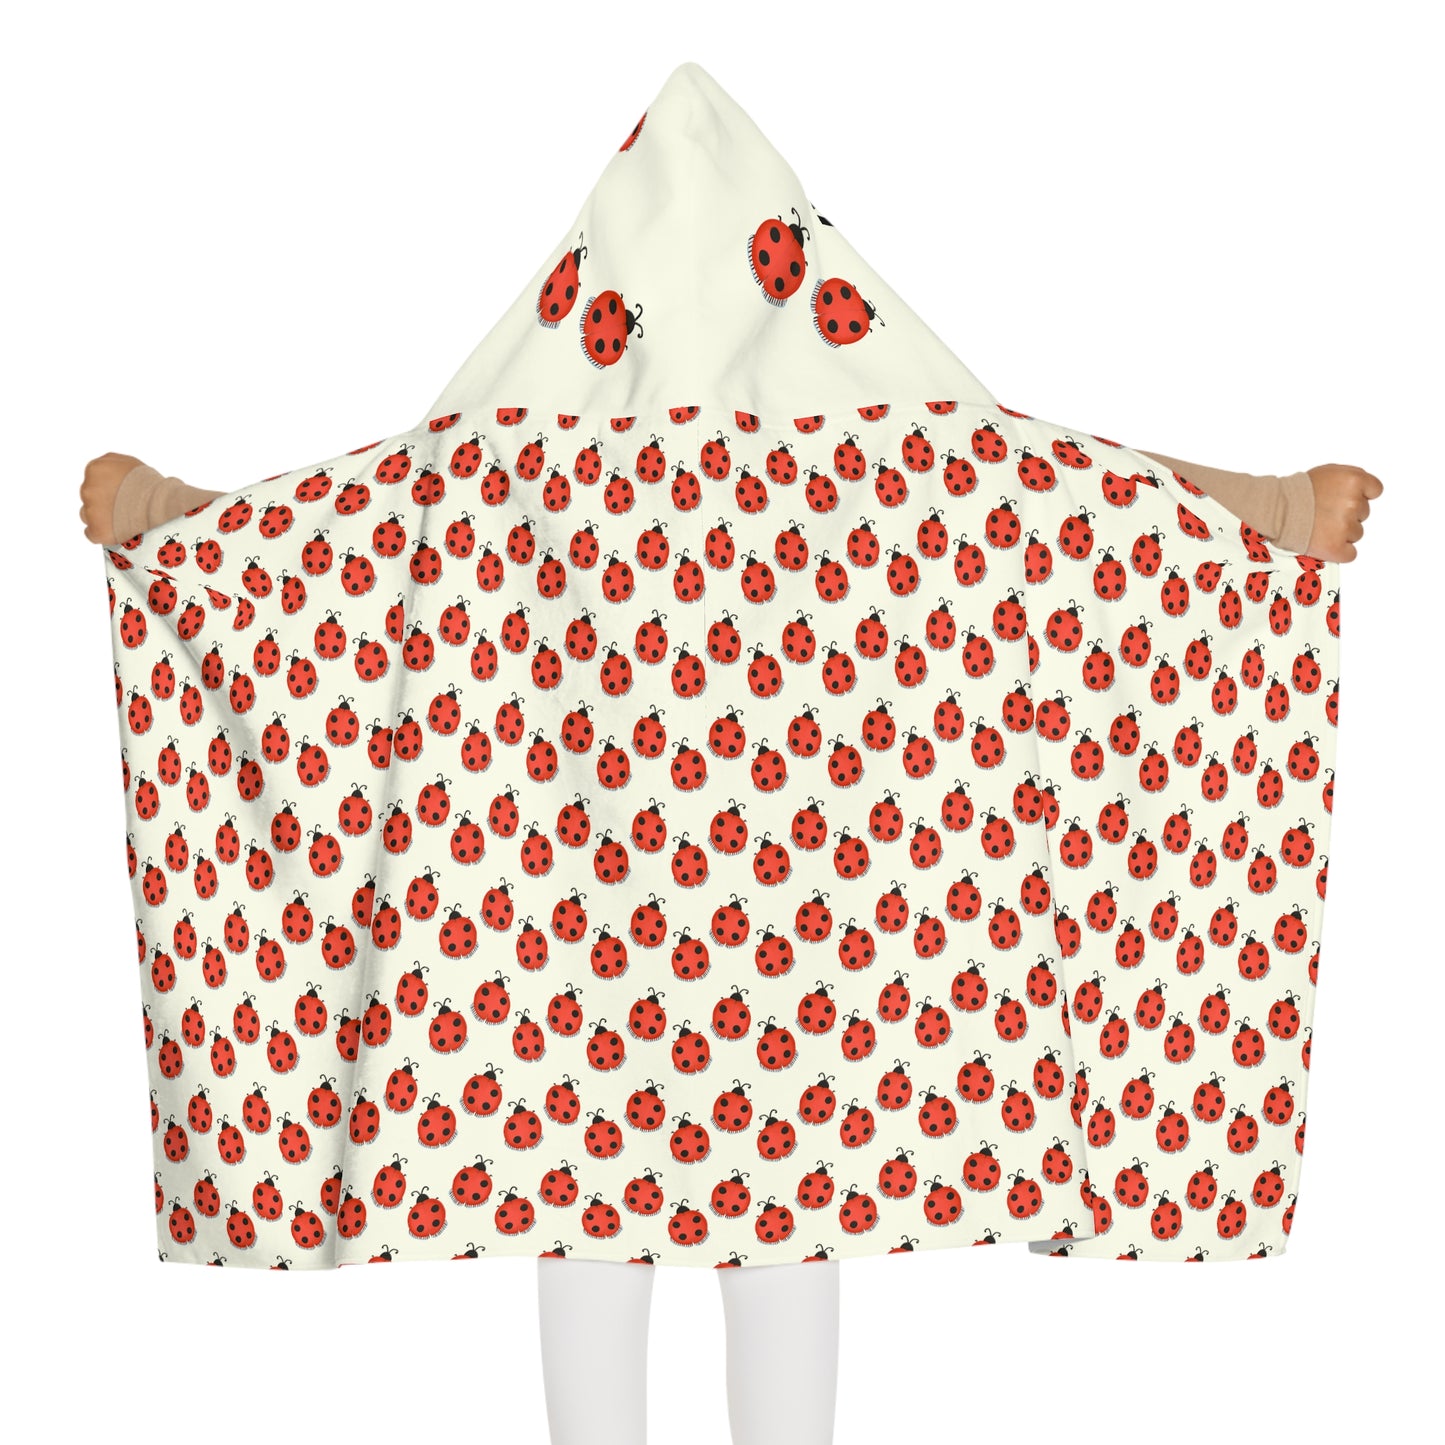 Ladybug Personalized Kids Hooded Towel, Ladybug Pattern, Youth Hooded Towel, Personalized Gift, Ladybug Towel with Name, Hooded Name Towel